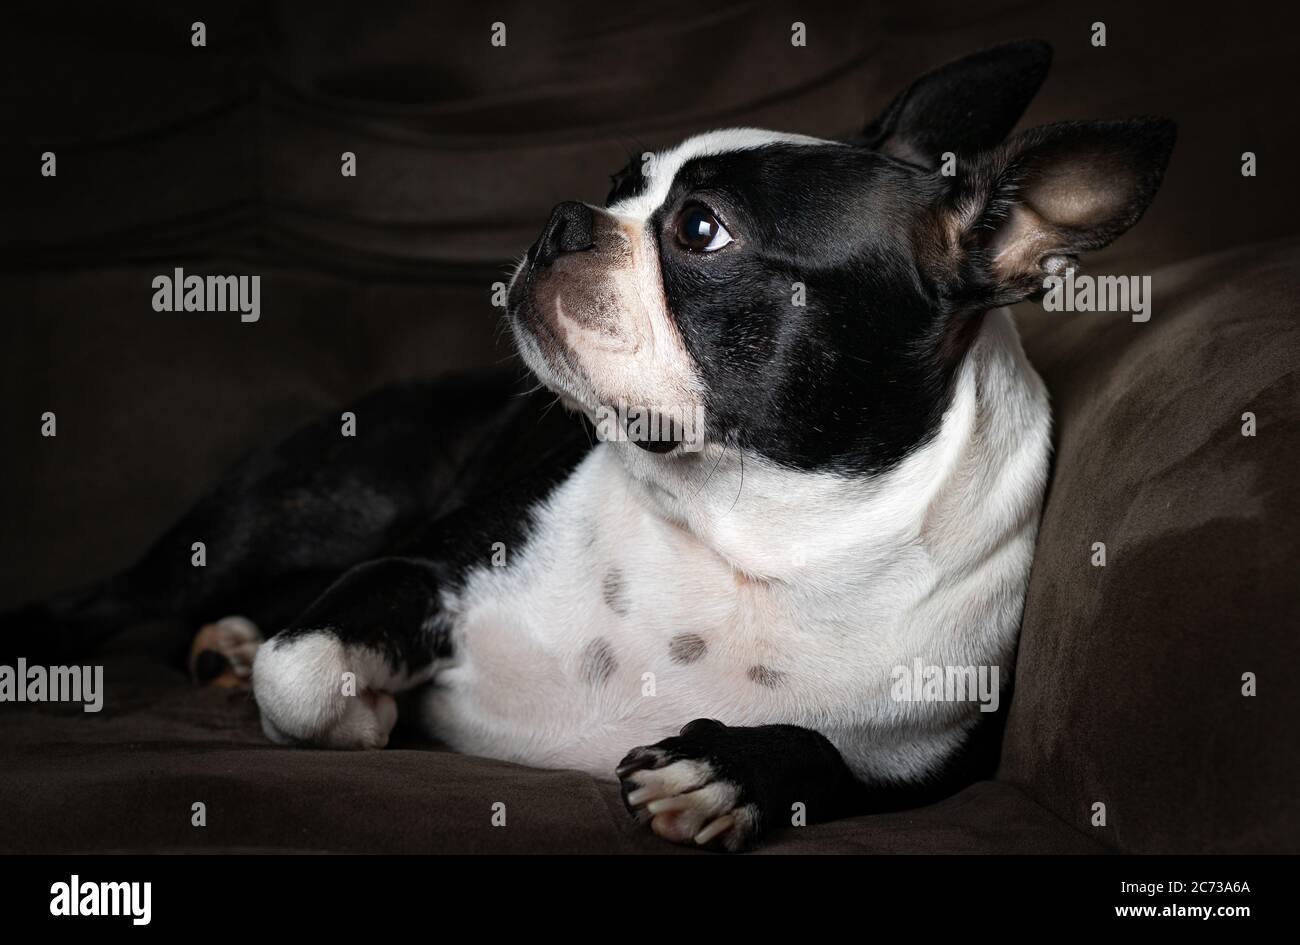 A Boston Terrier posing like I don't realize. Una bella Boston Terrier posando como si no me doy cuenta Stock Photo